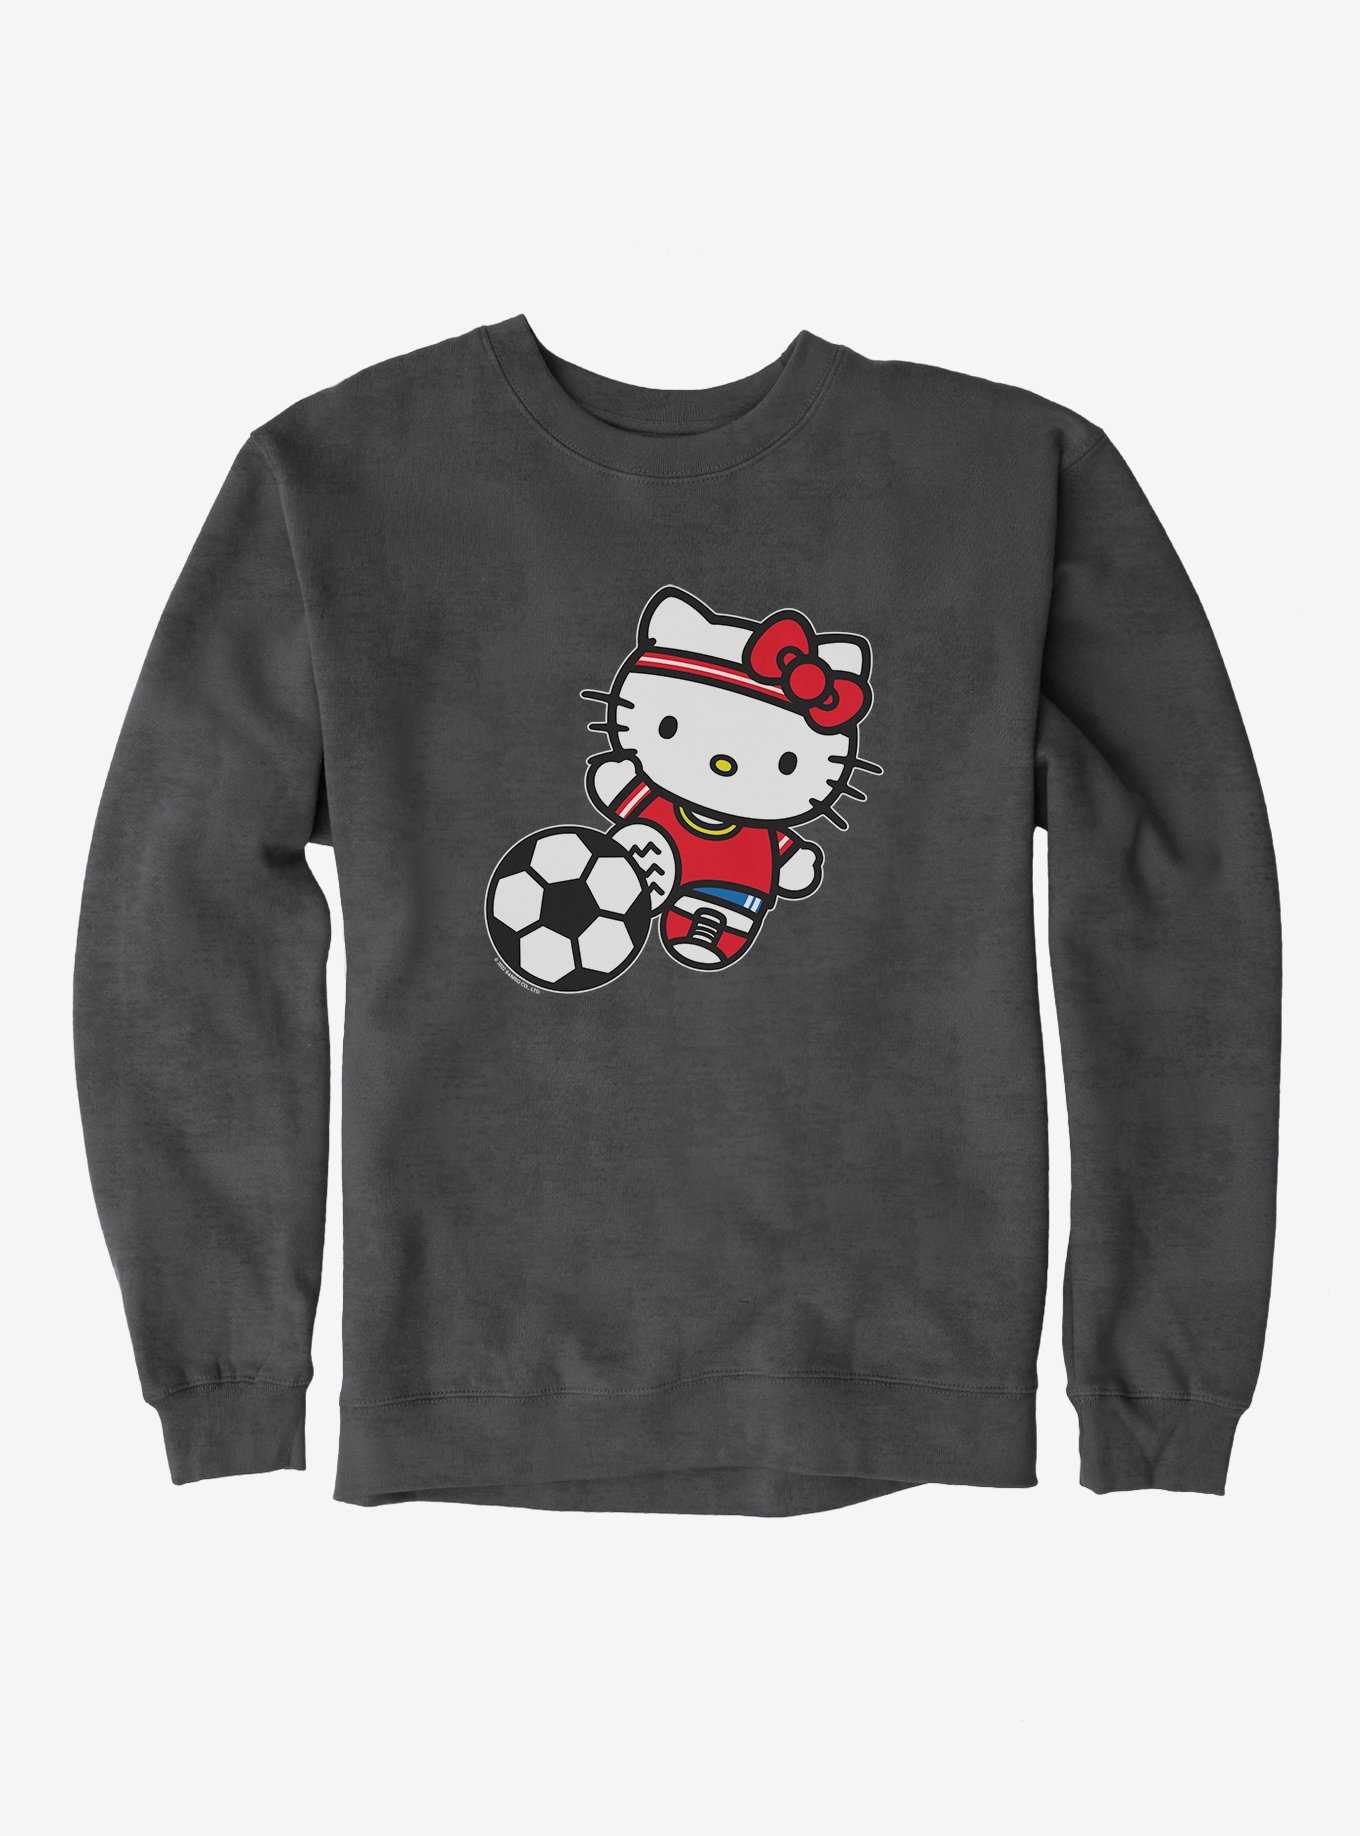 Hello Kitty Soccer Kick Sweatshirt, , hi-res